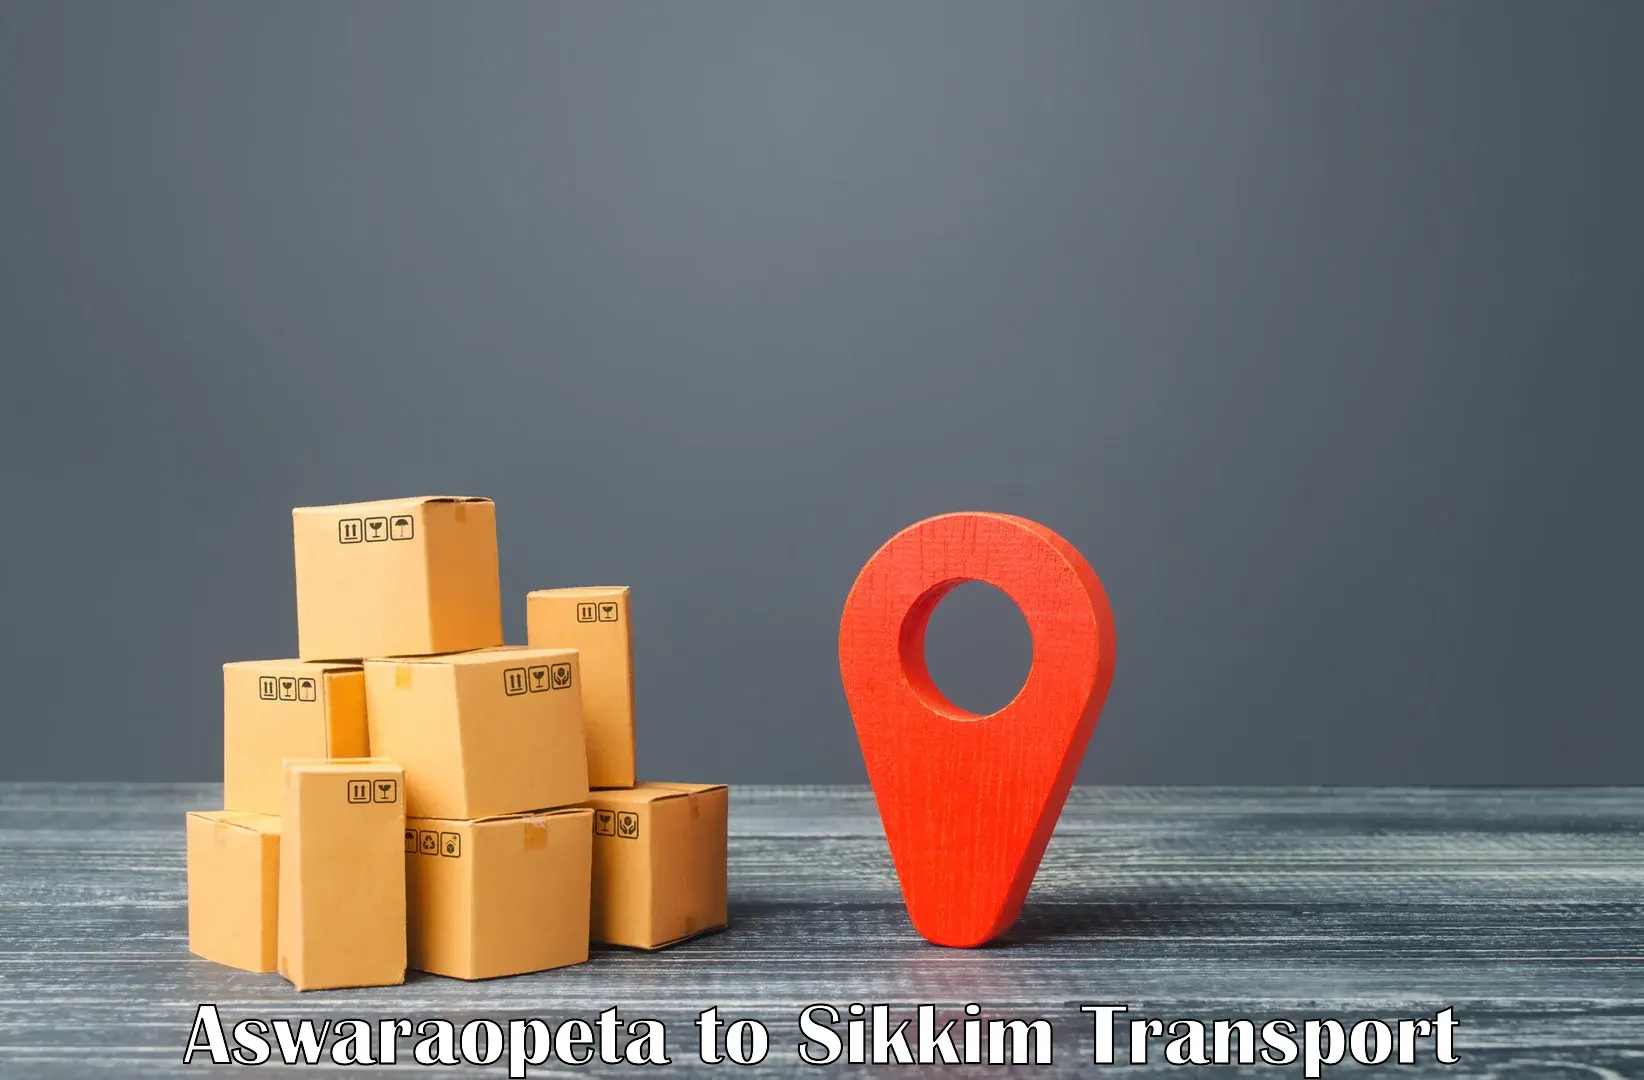 Delivery service Aswaraopeta to North Sikkim